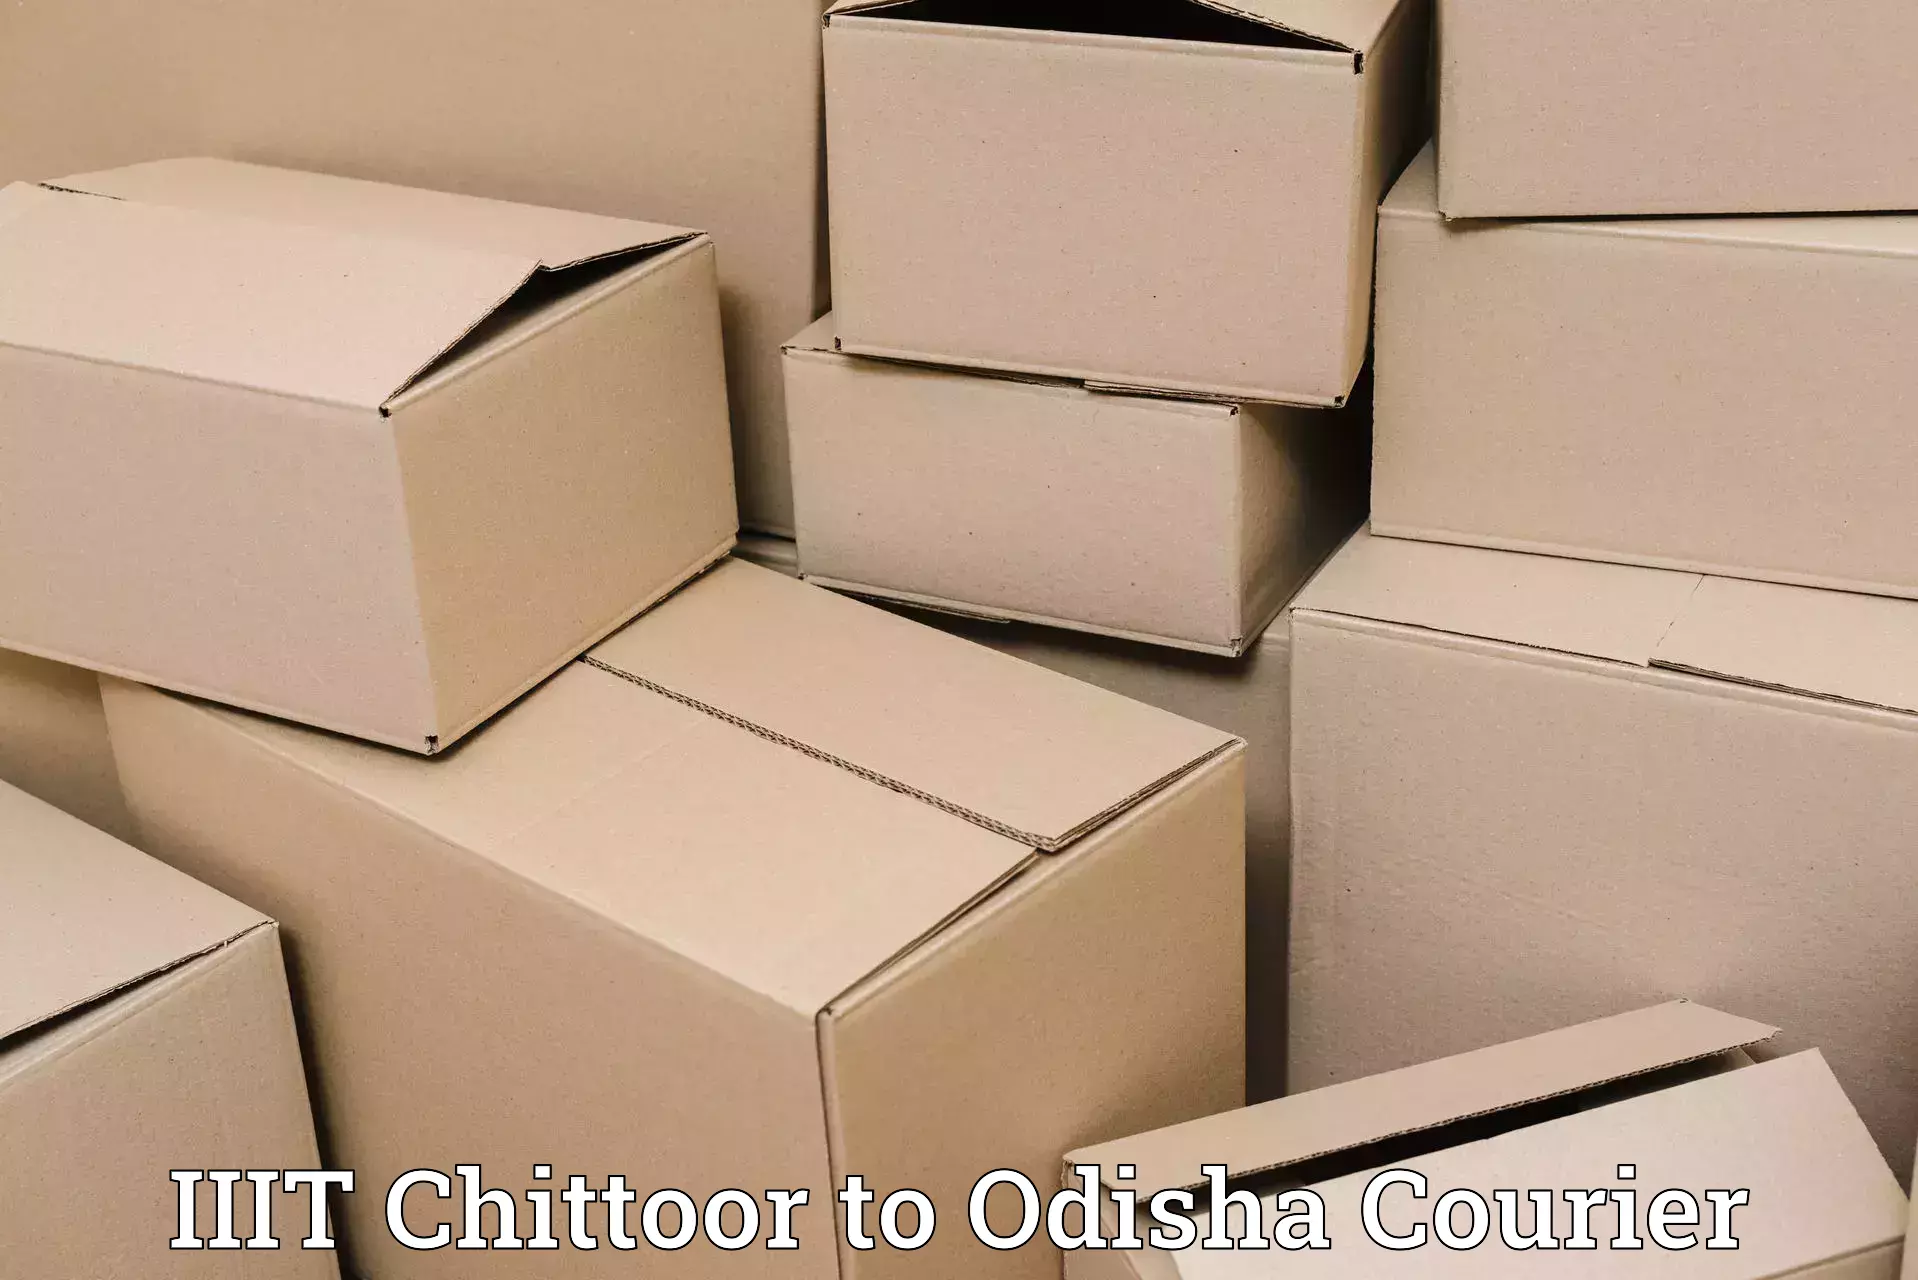 Affordable international shipping in IIIT Chittoor to Jagatsinghpur